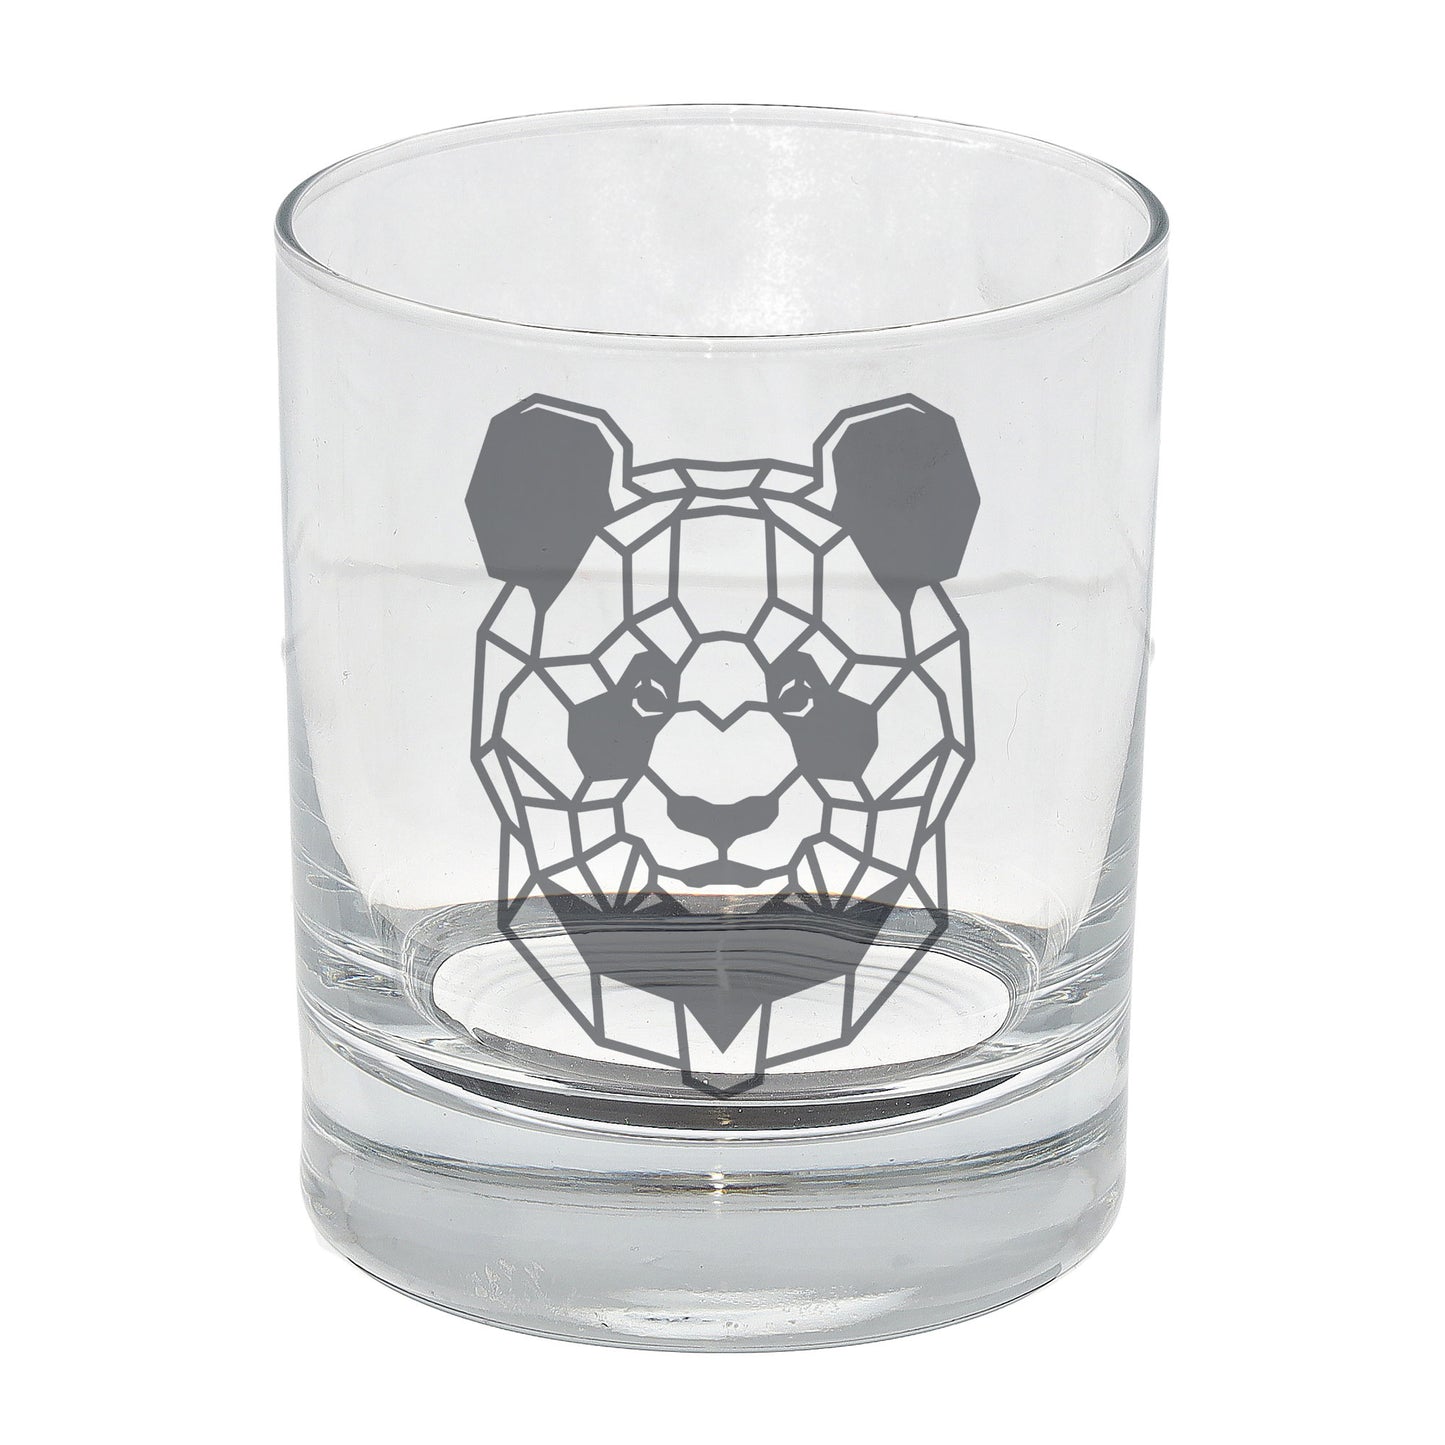 Panda Engraved Whisky Glass  - Always Looking Good -   